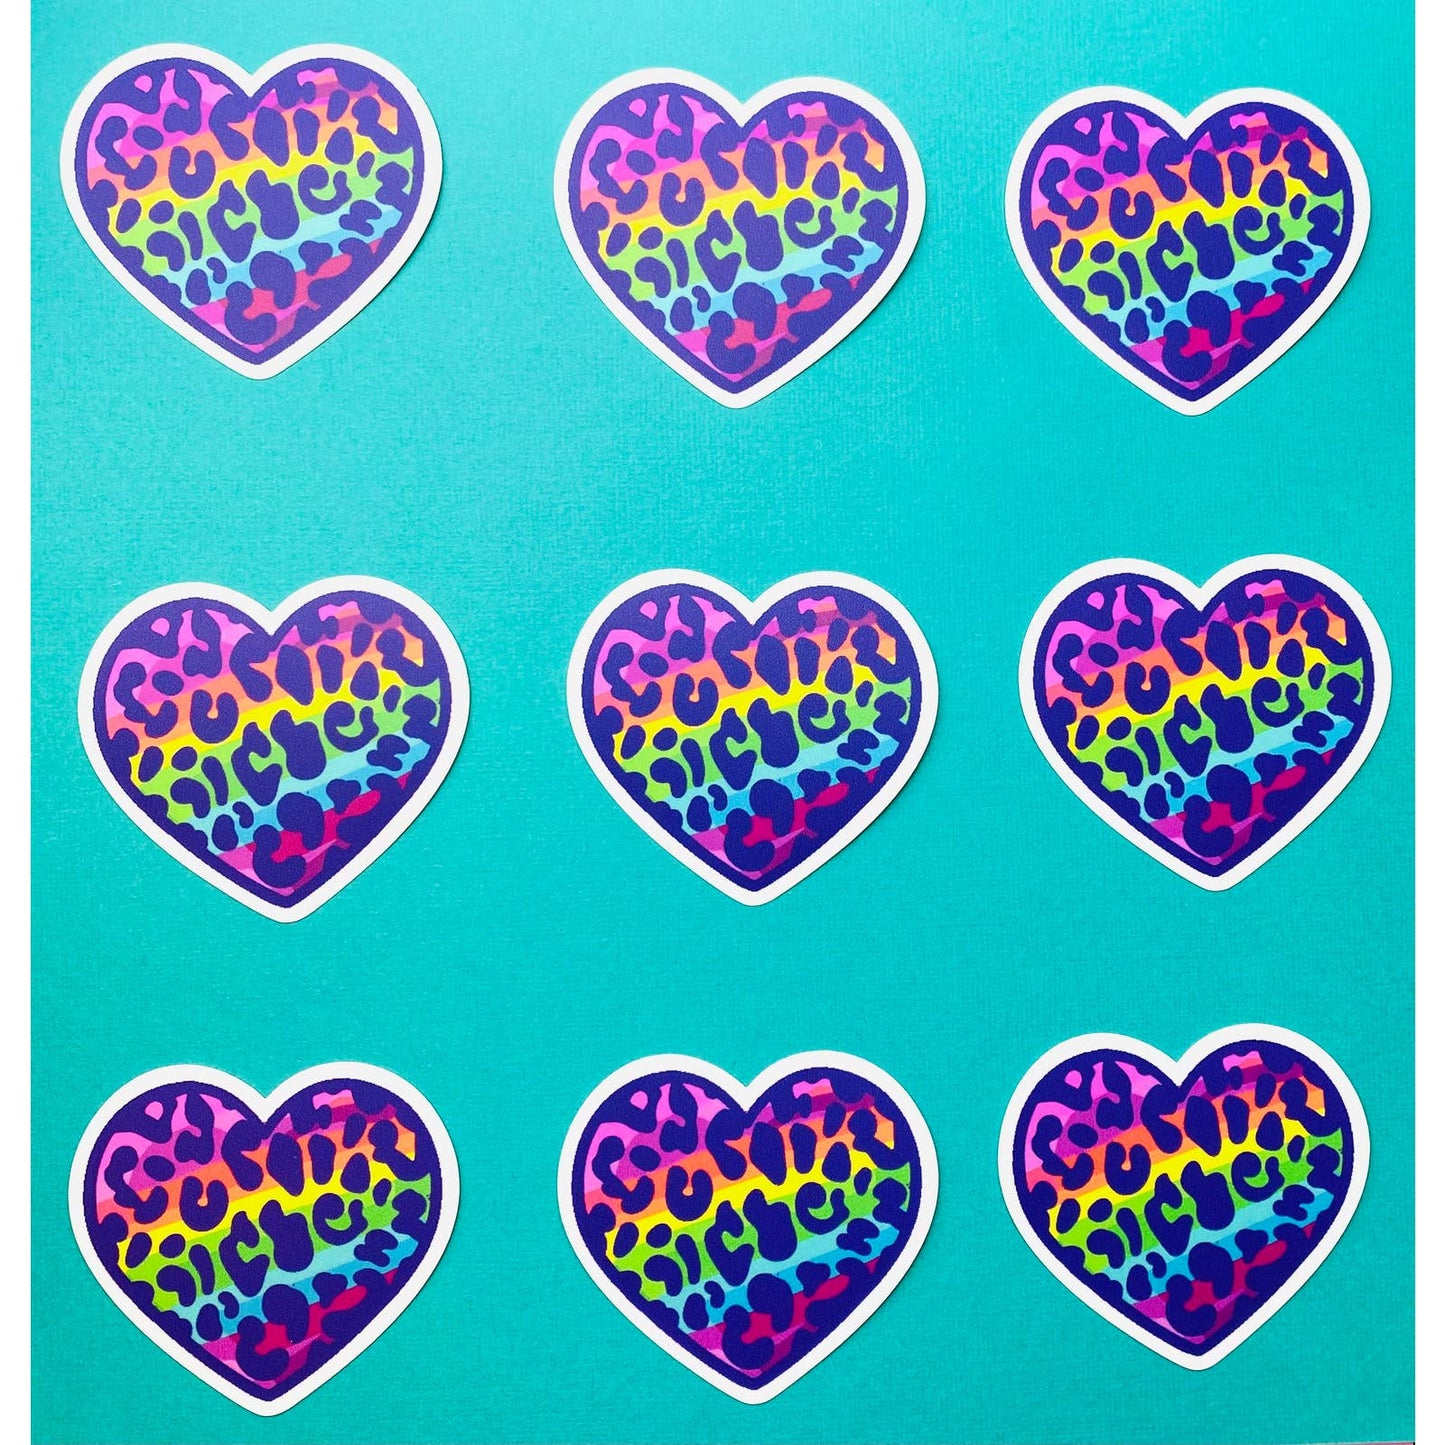 Rainbow Leopard Heart Sticker Girly 90s Vibes Nineties - Inspired Aesthetic Sticker